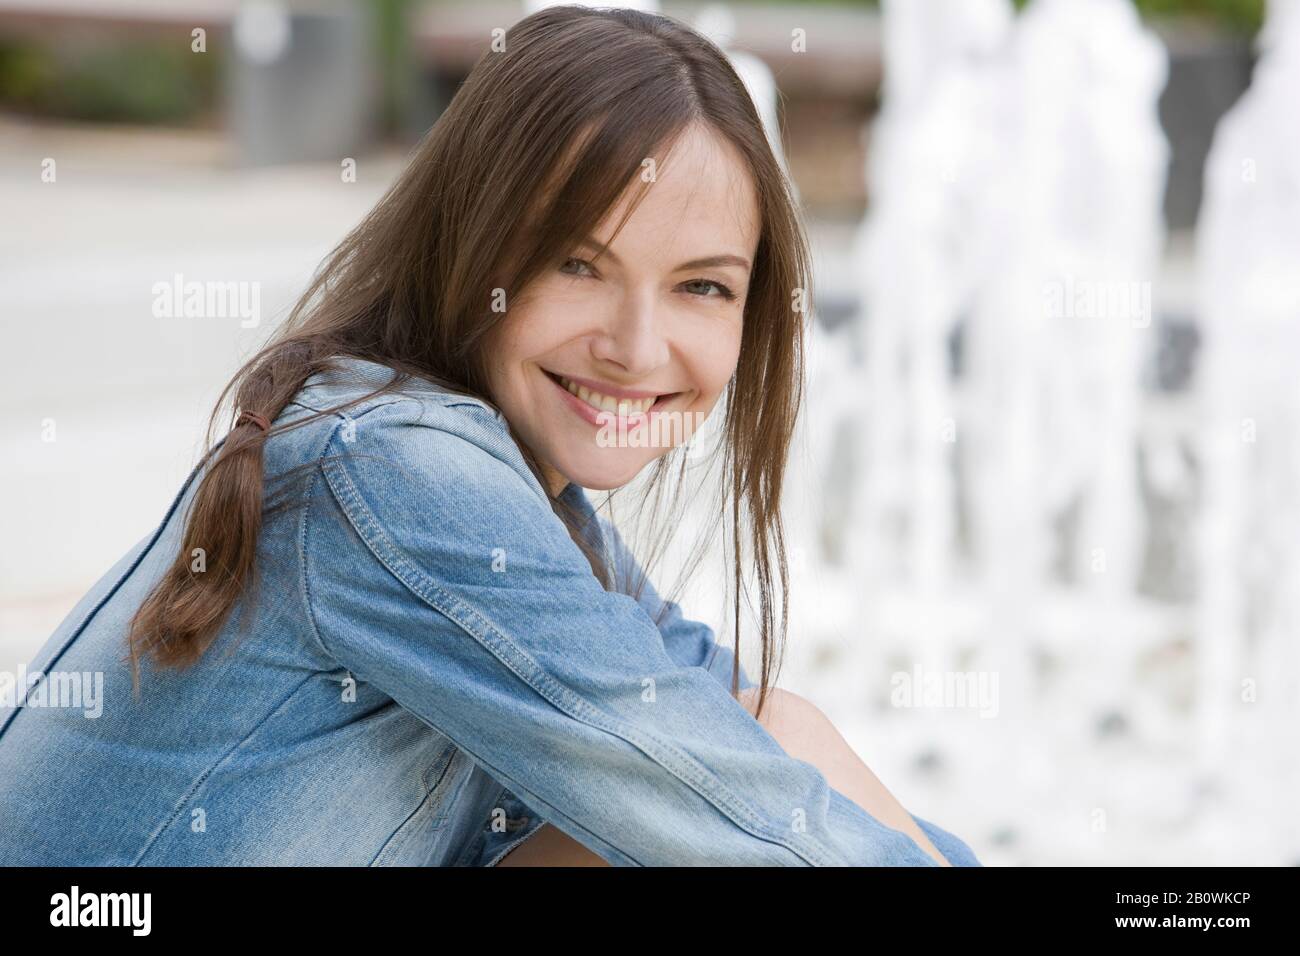 Portrait of a woman wearing a denim jacket Stock Photo